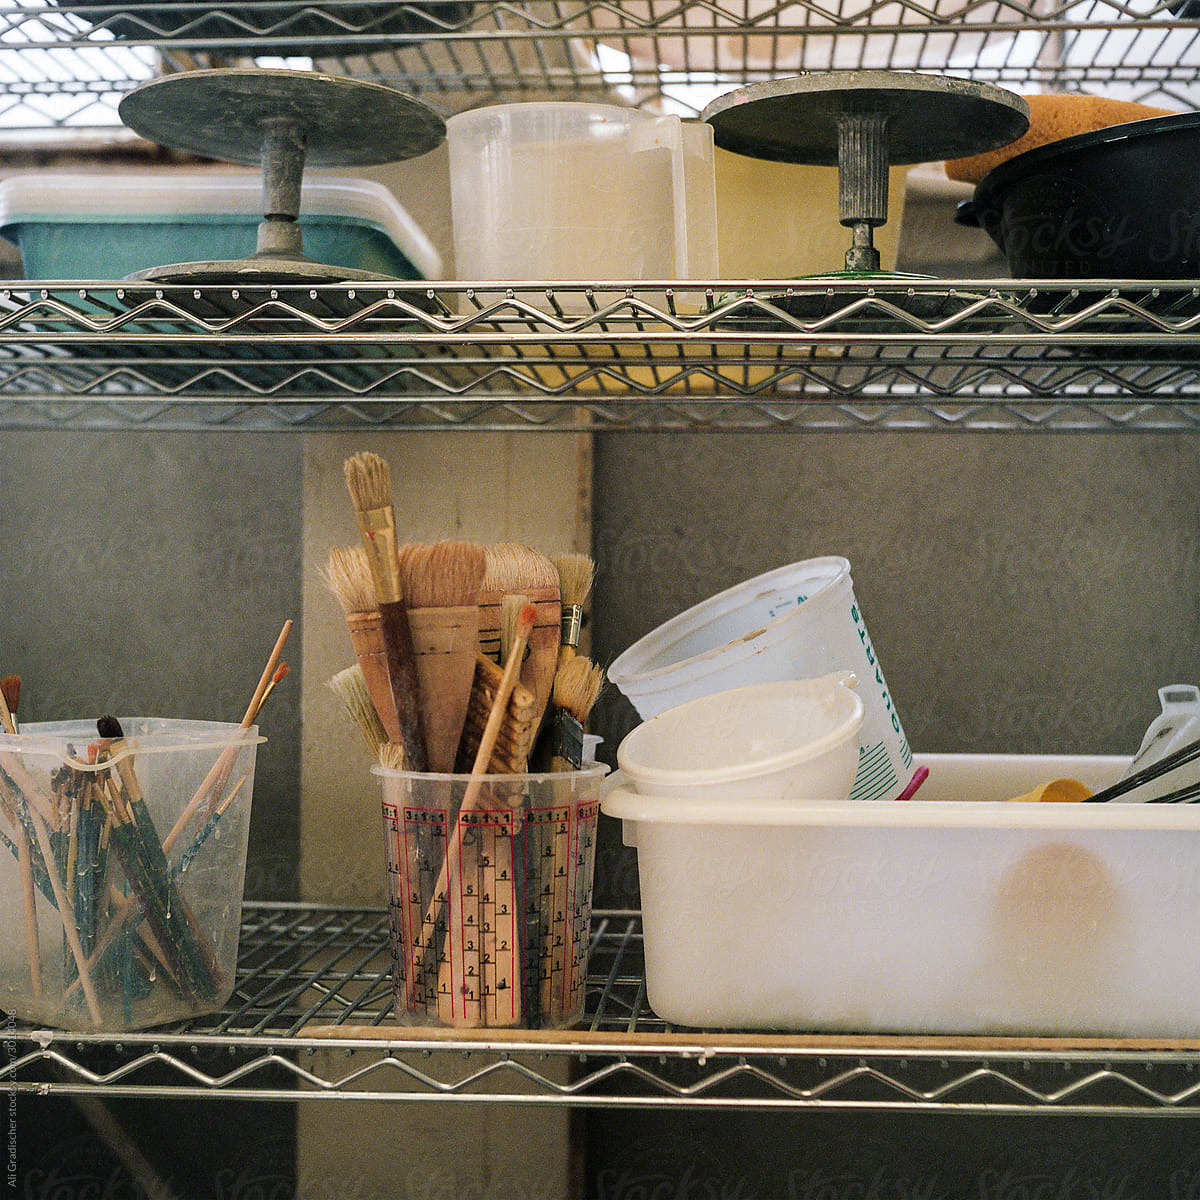 Ceramic Equipment and Art Tools on a Shelf